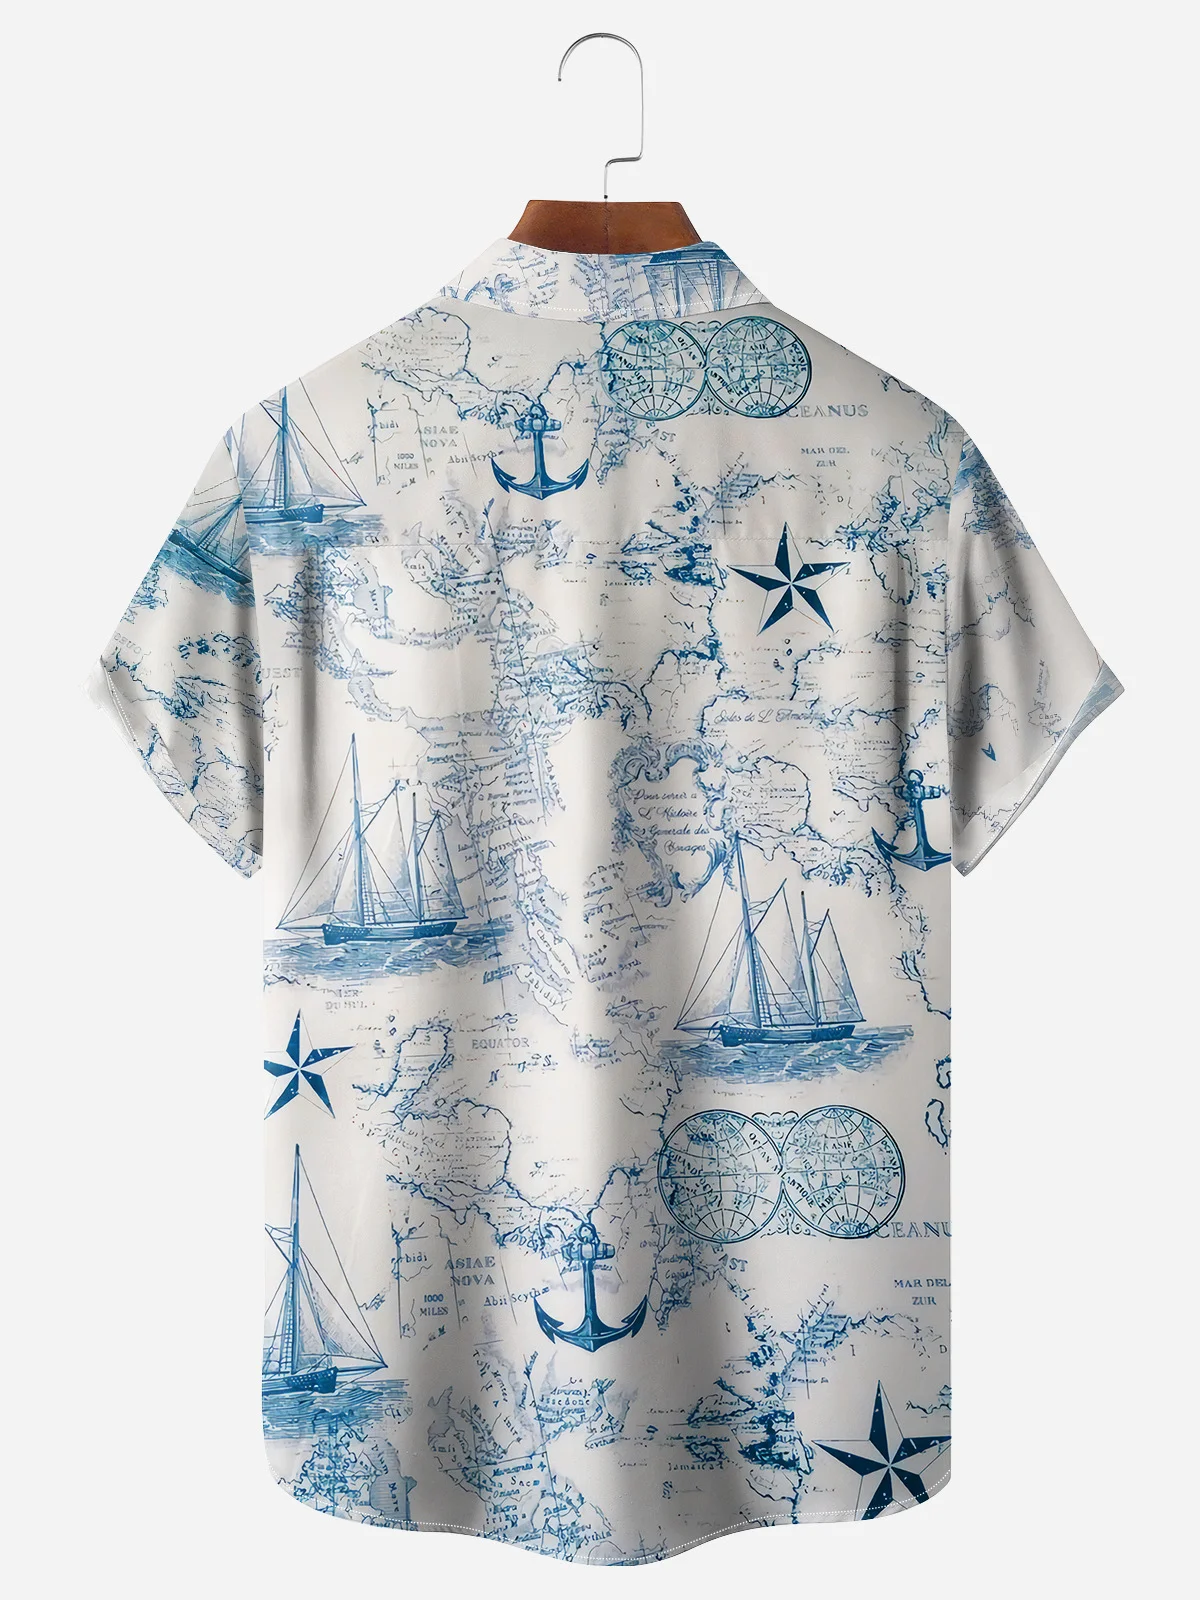 Hardaddy Map Sailing Chest Pocket Short Sleeves Hawaiian Nautical Shirts